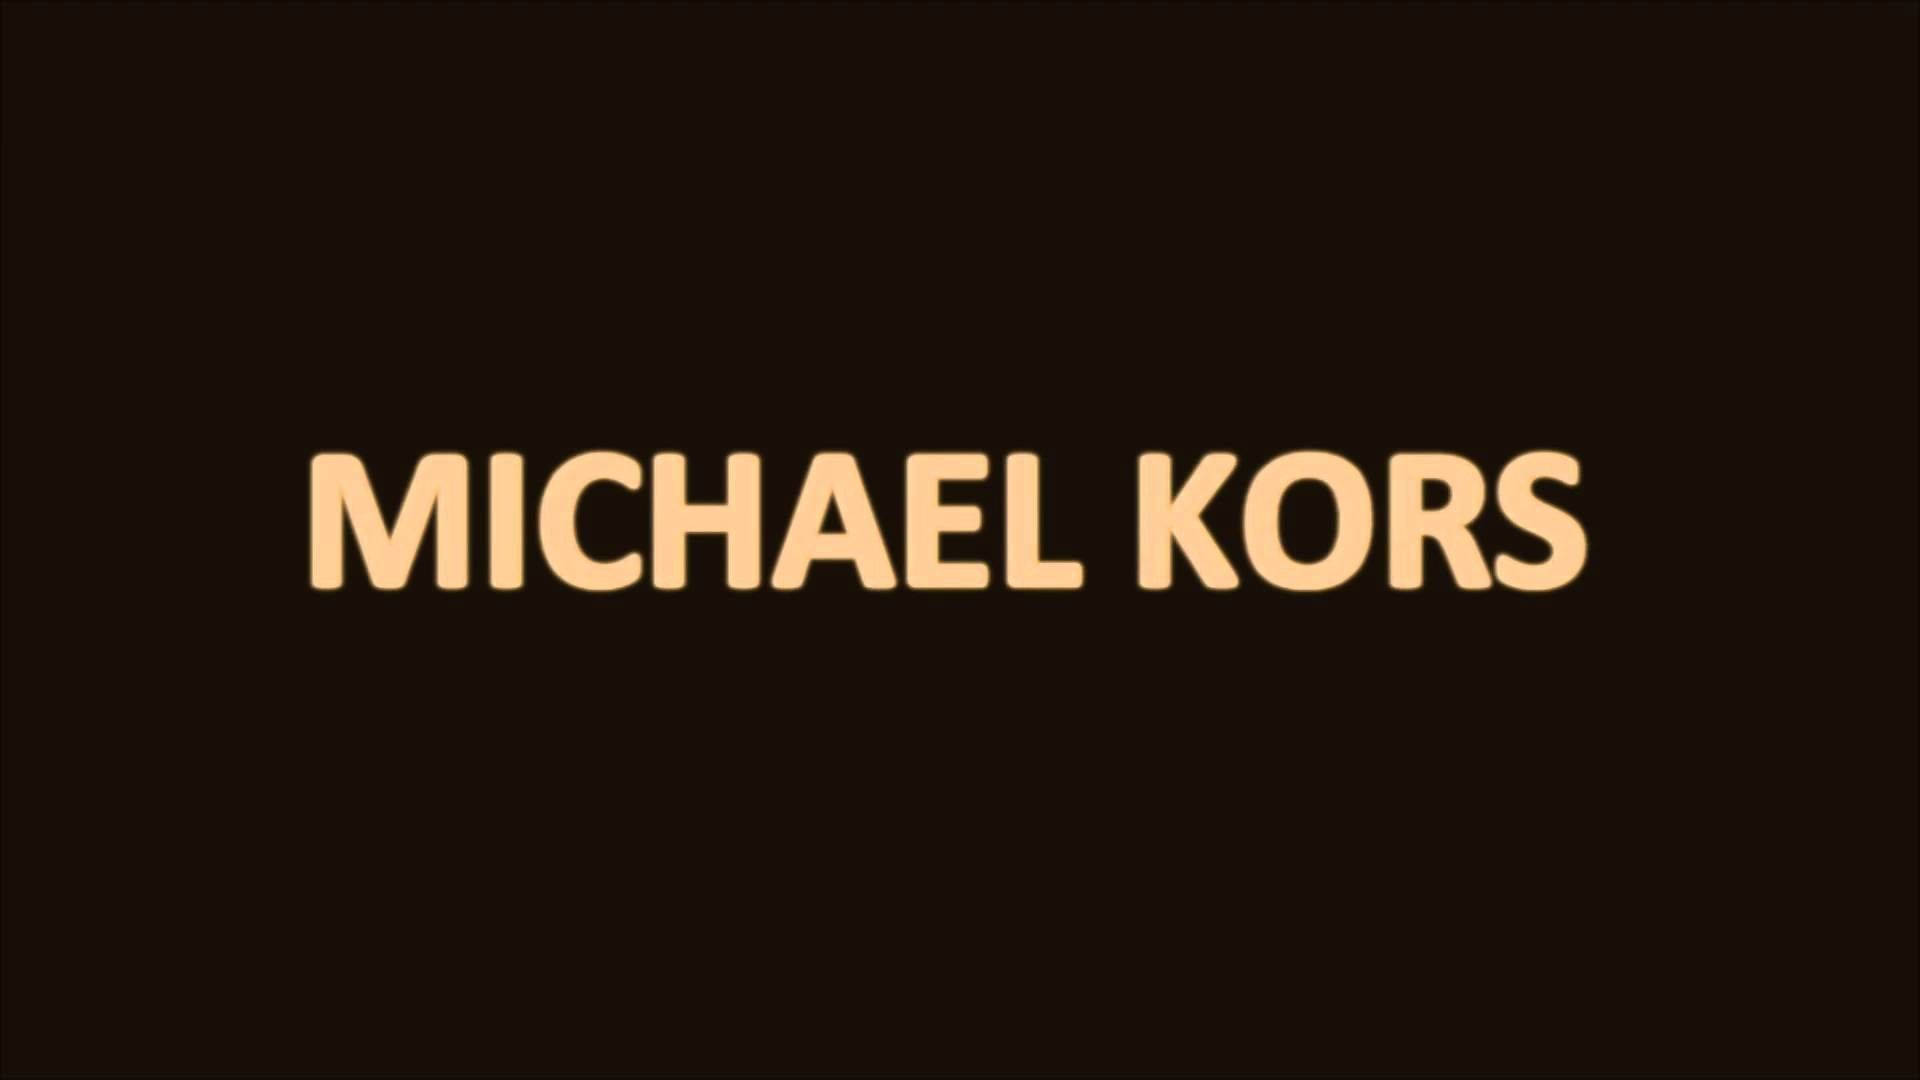 Michael Kors Background Photos